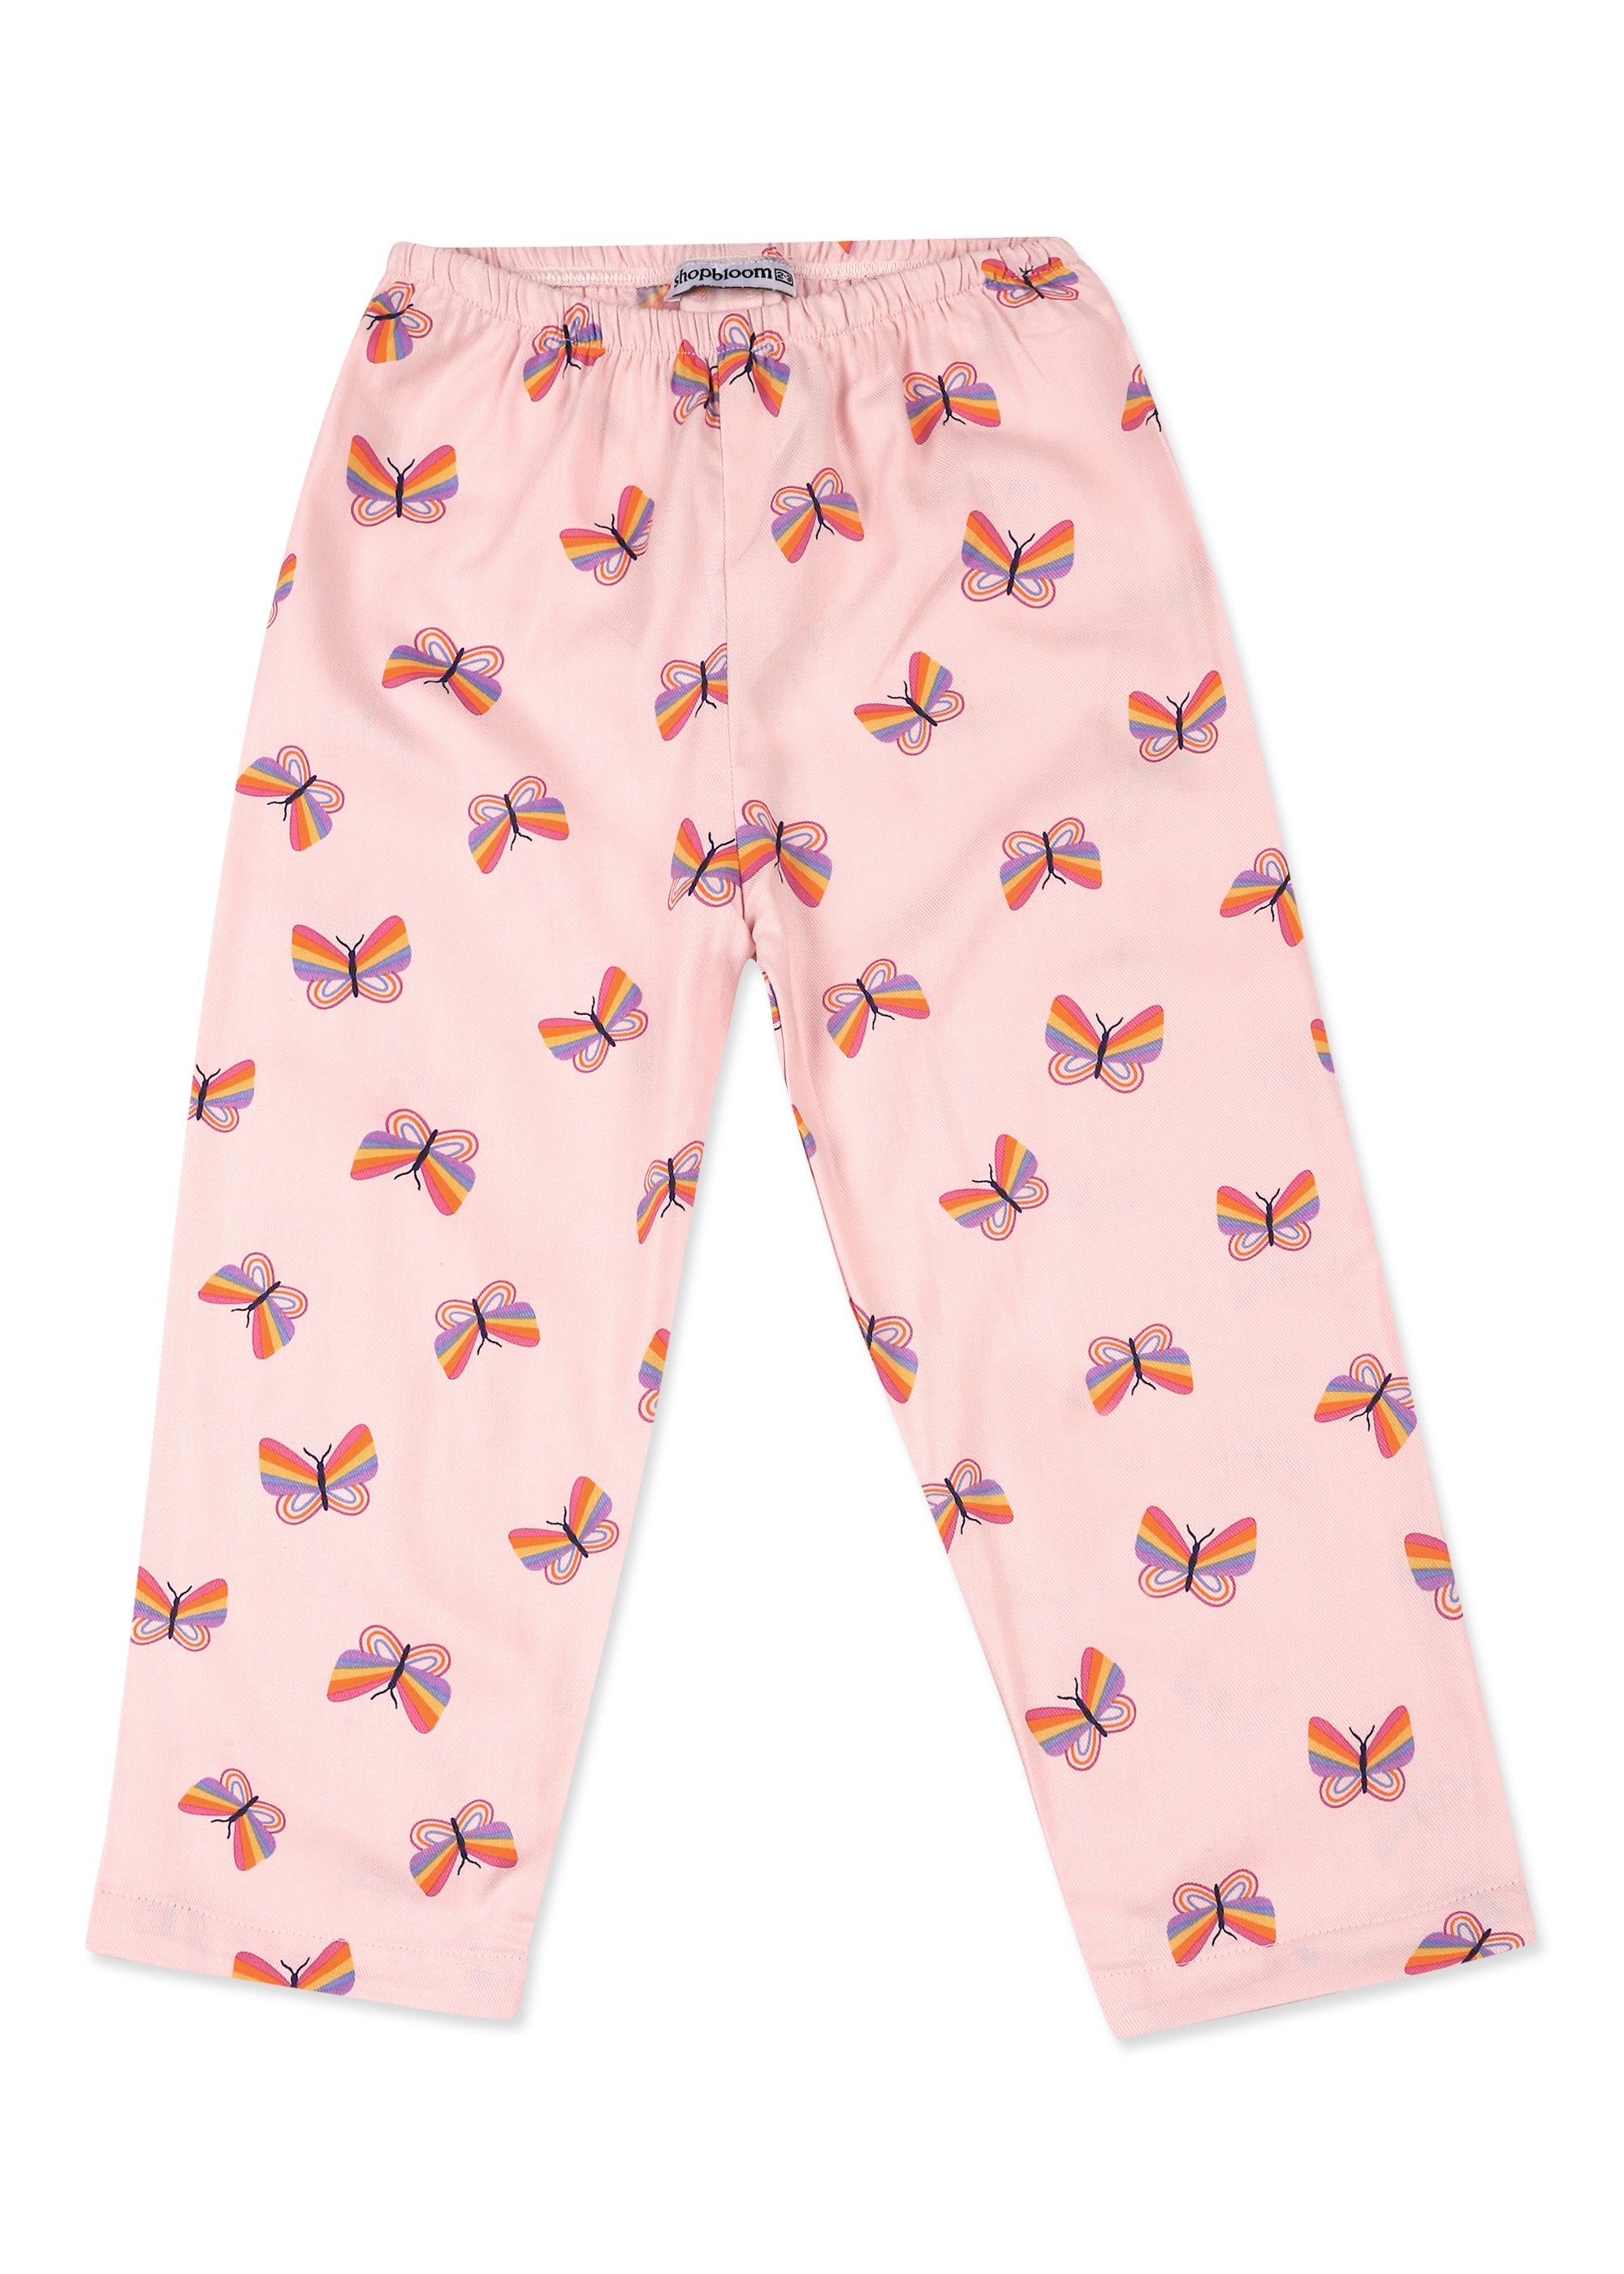 Butterfly Print Short Sleeve Kids Night Suit - Shopbloom